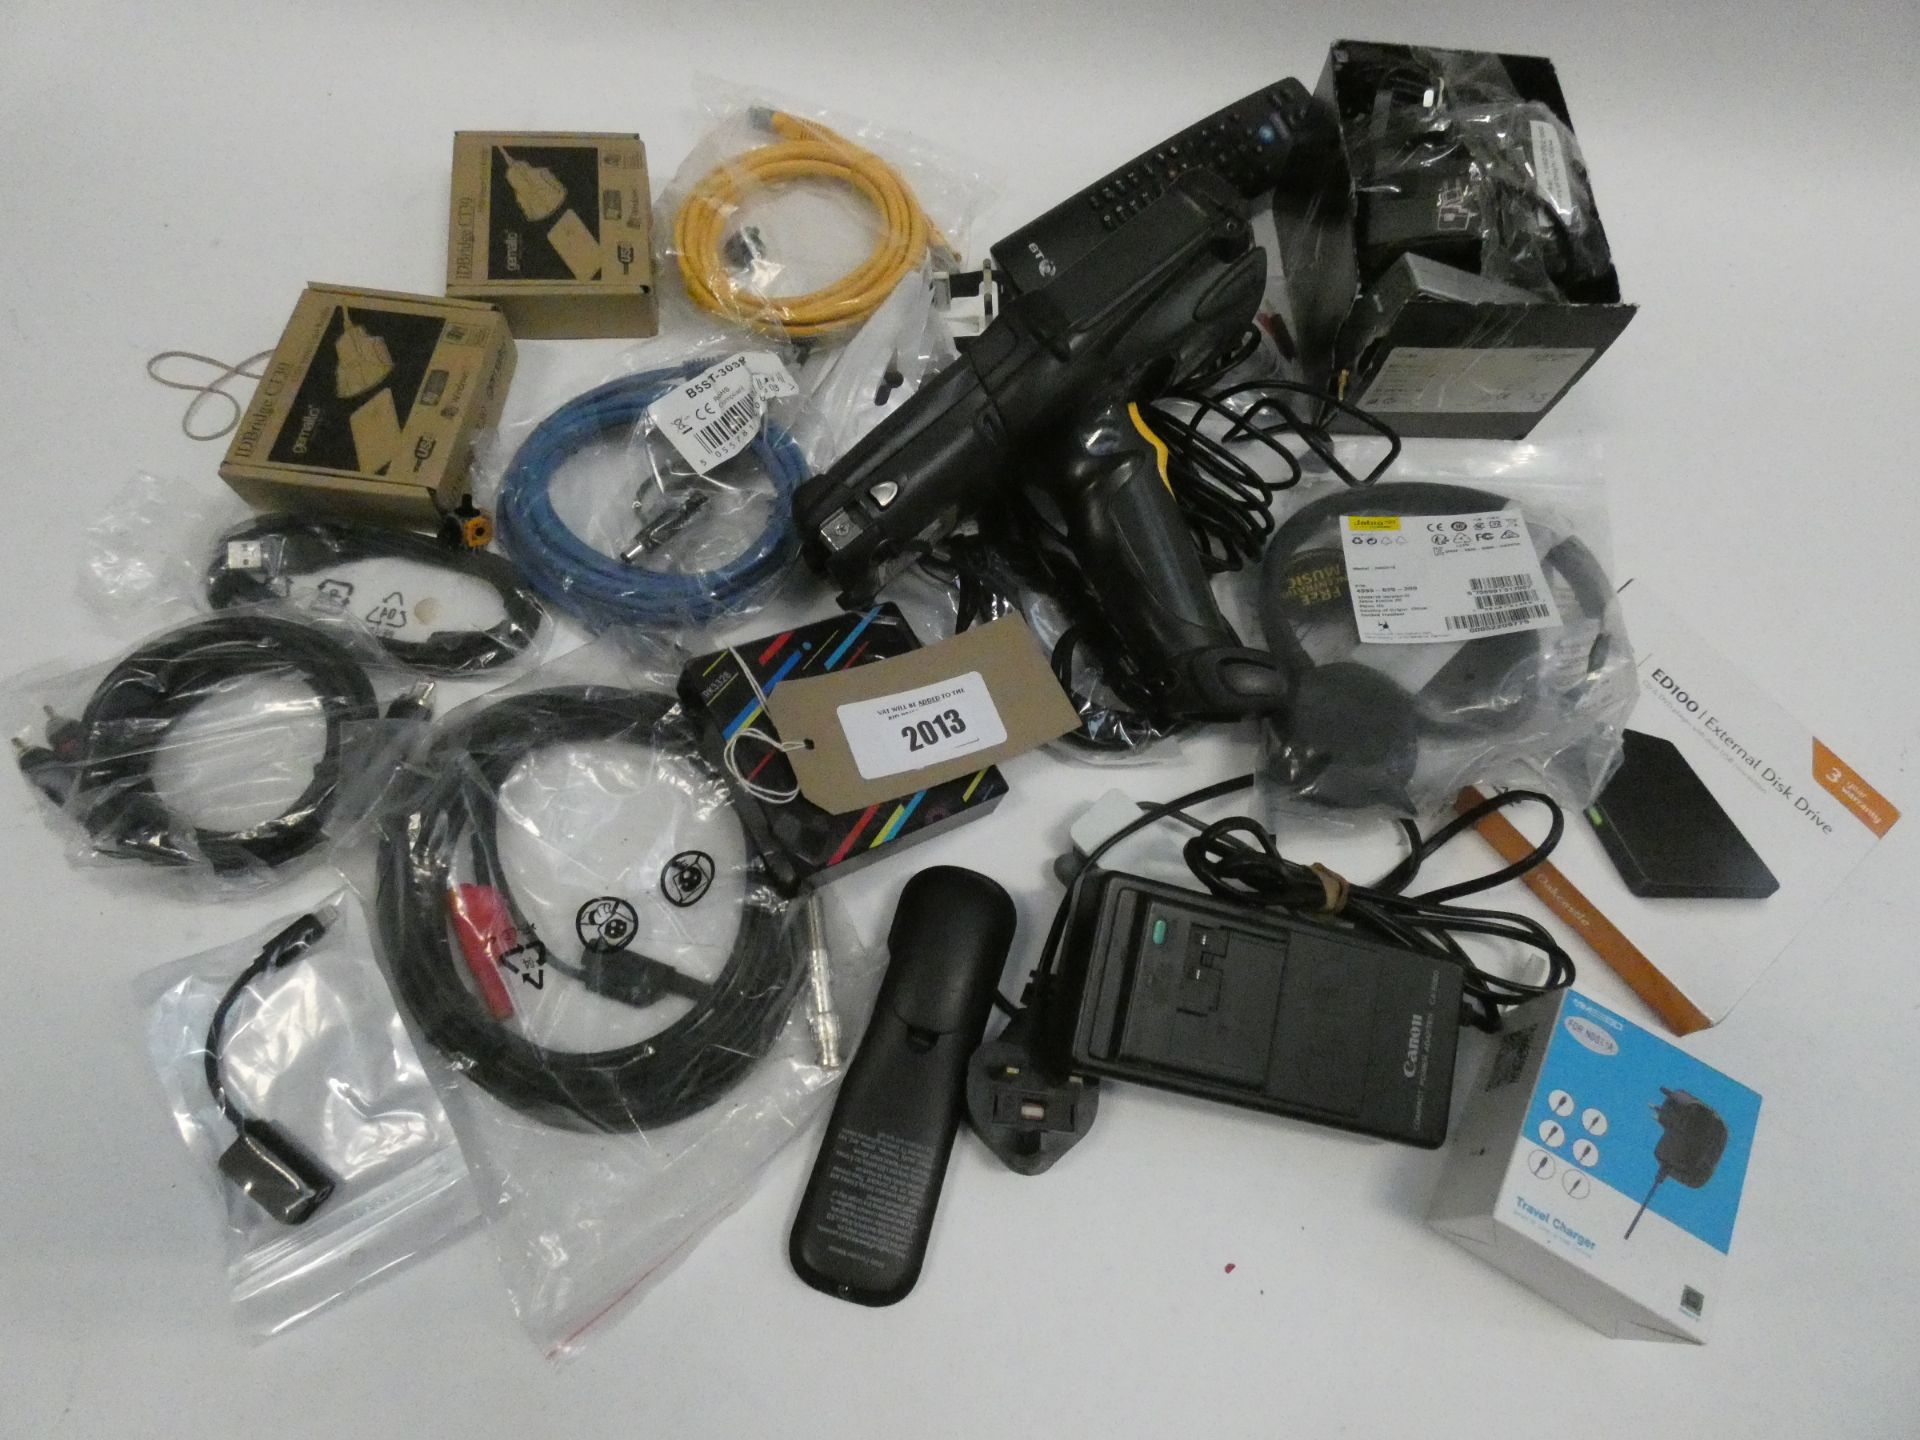 Bag containing various cameras and camera accessories